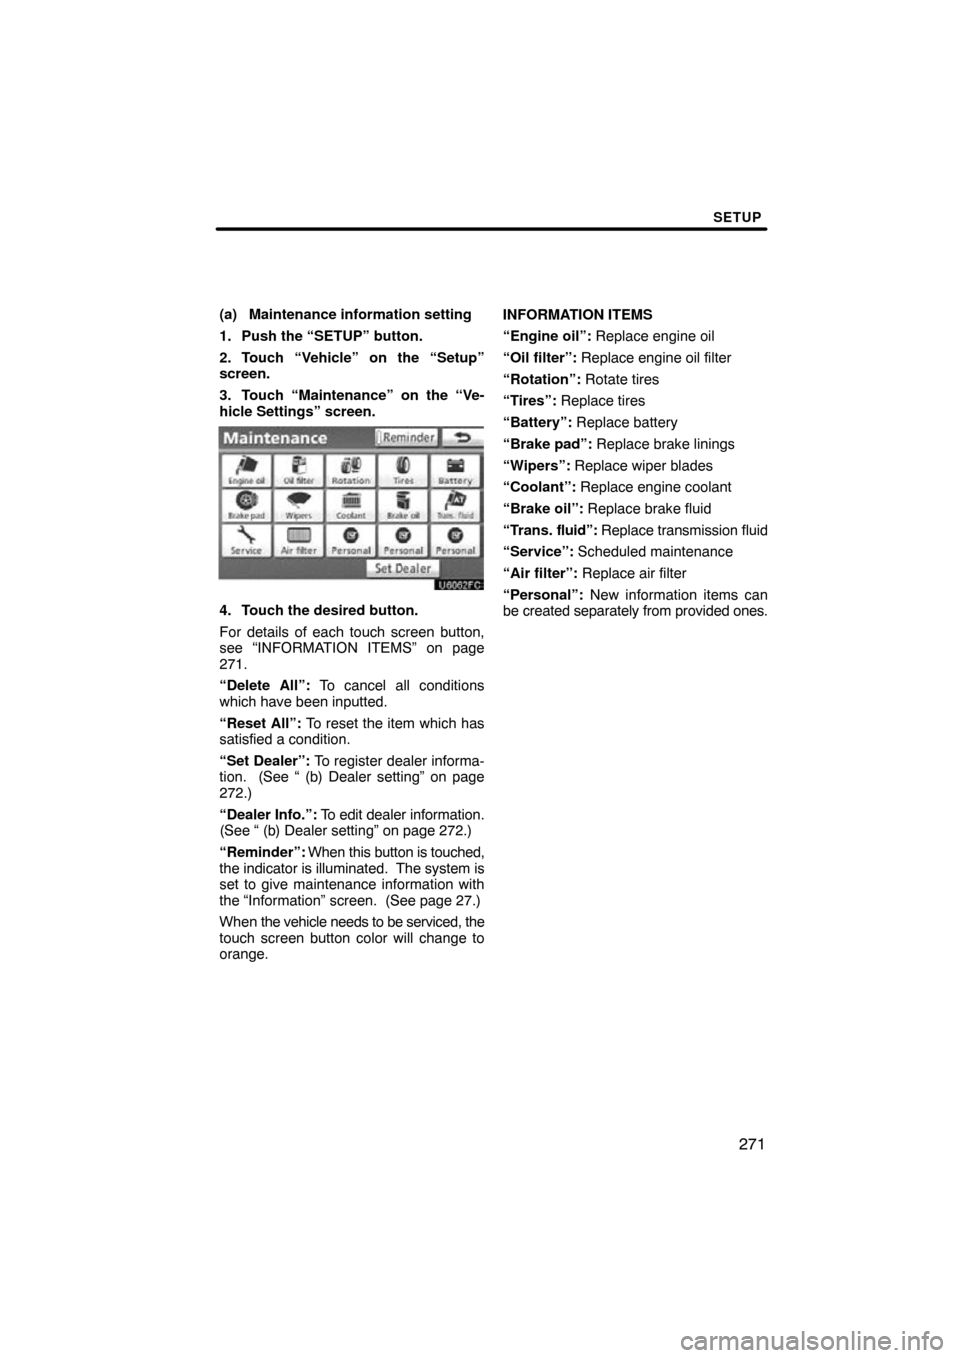 TOYOTA AVALON 2011 XX30 / 3.G Navigation Manual SETUP
271
(a) Maintenance information setting
1. Push the “SETUP” button.
2. Touch “Vehicle” on the “Setup”
screen.
3. Touch “Maintenance” on the “Ve-
hicle Settings” screen.
4. To